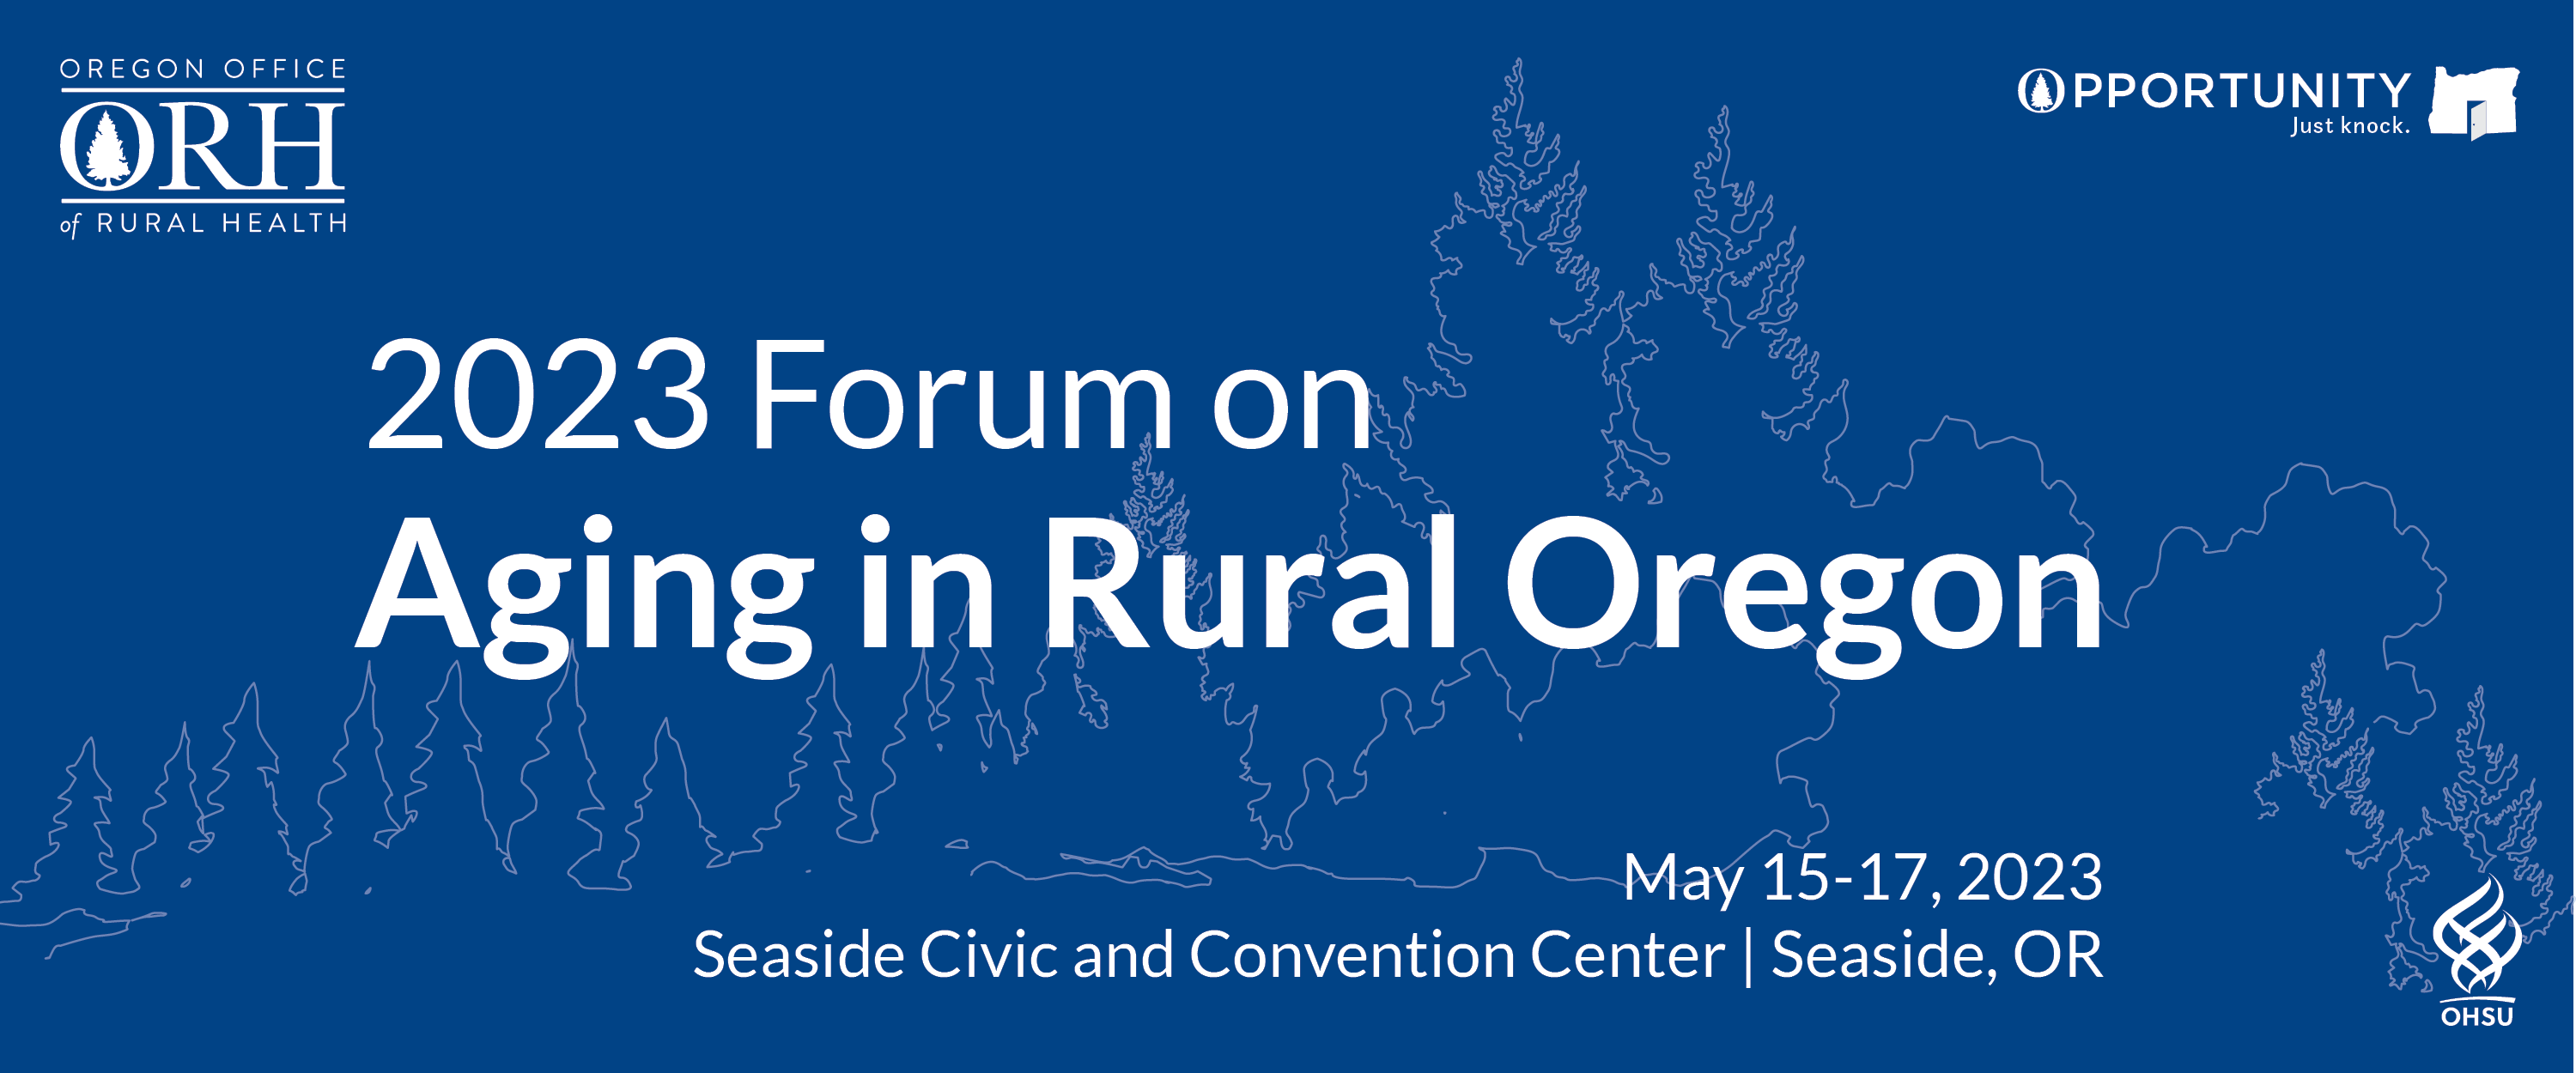 2023 Forum on Aging in Rural Oregon